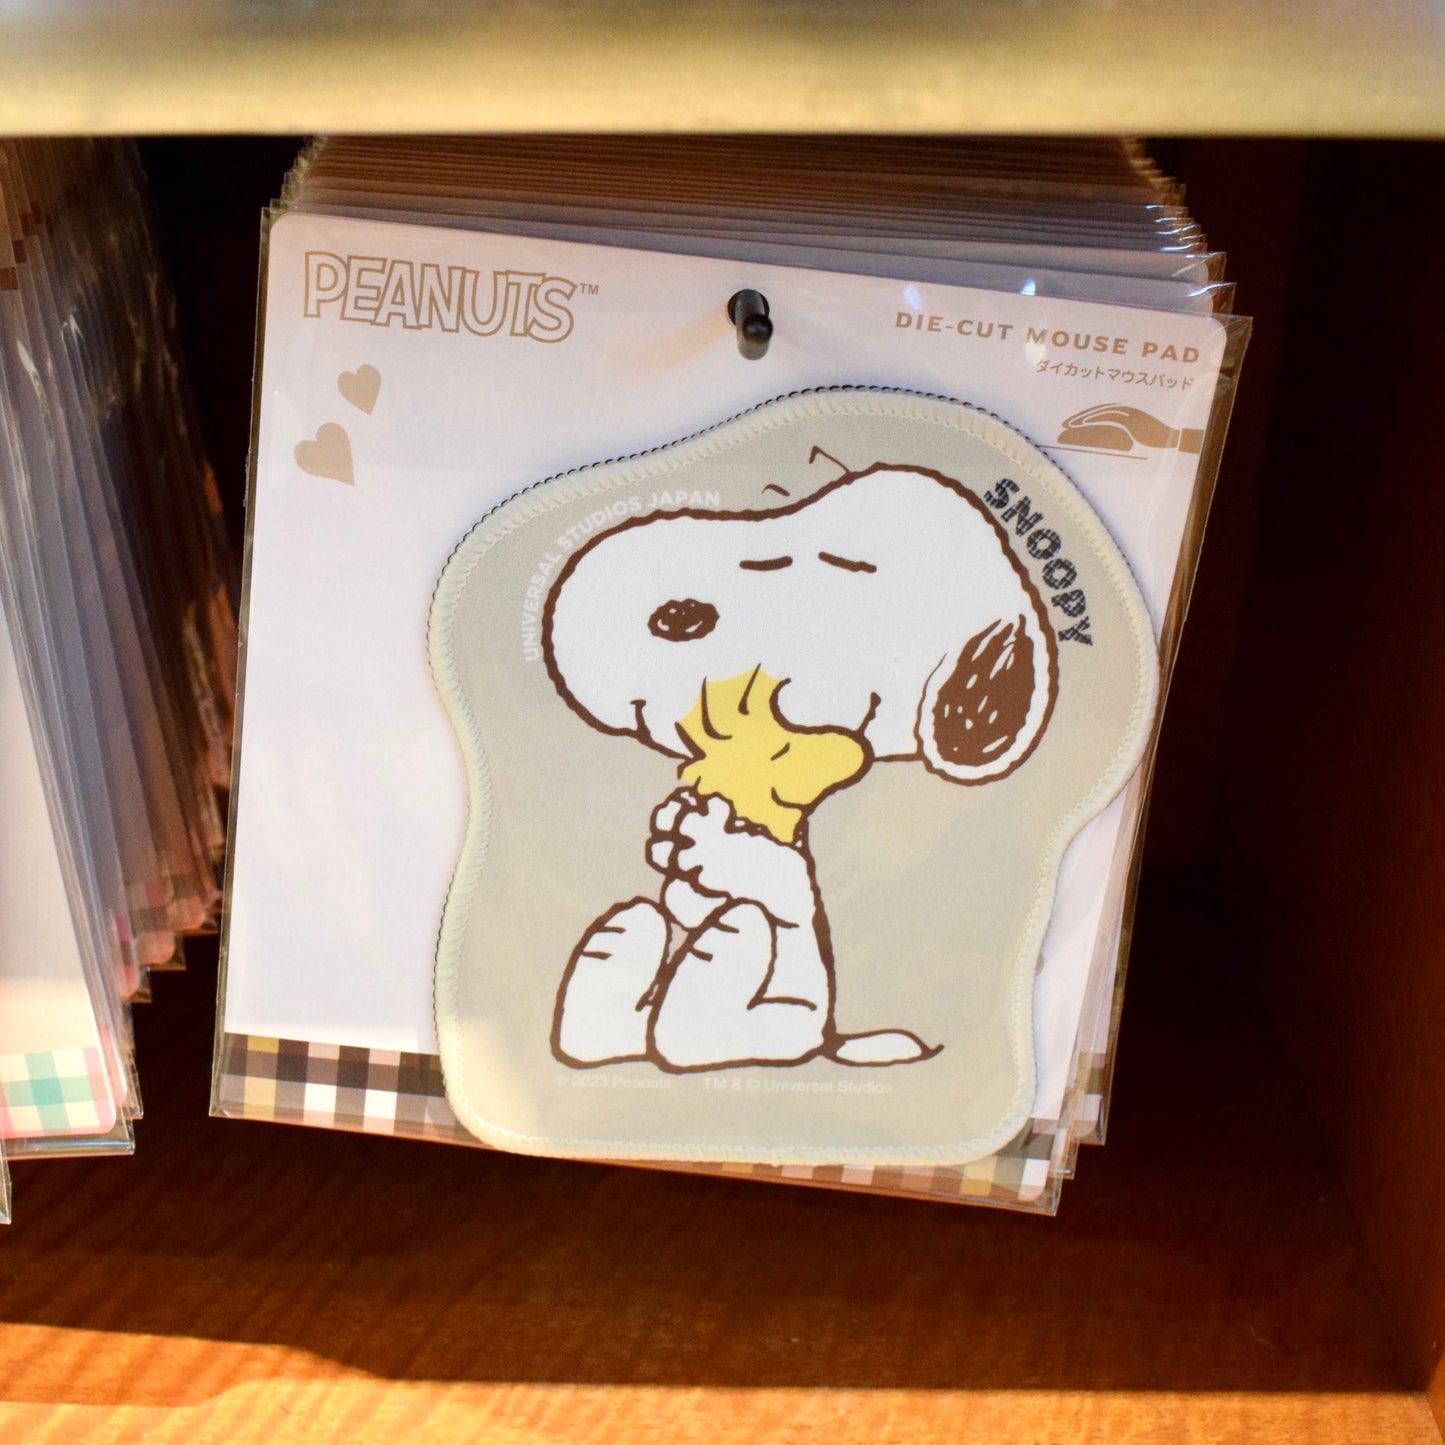 【Order】USJ Minions / Snoopy / Tim Bear Mouse Pad